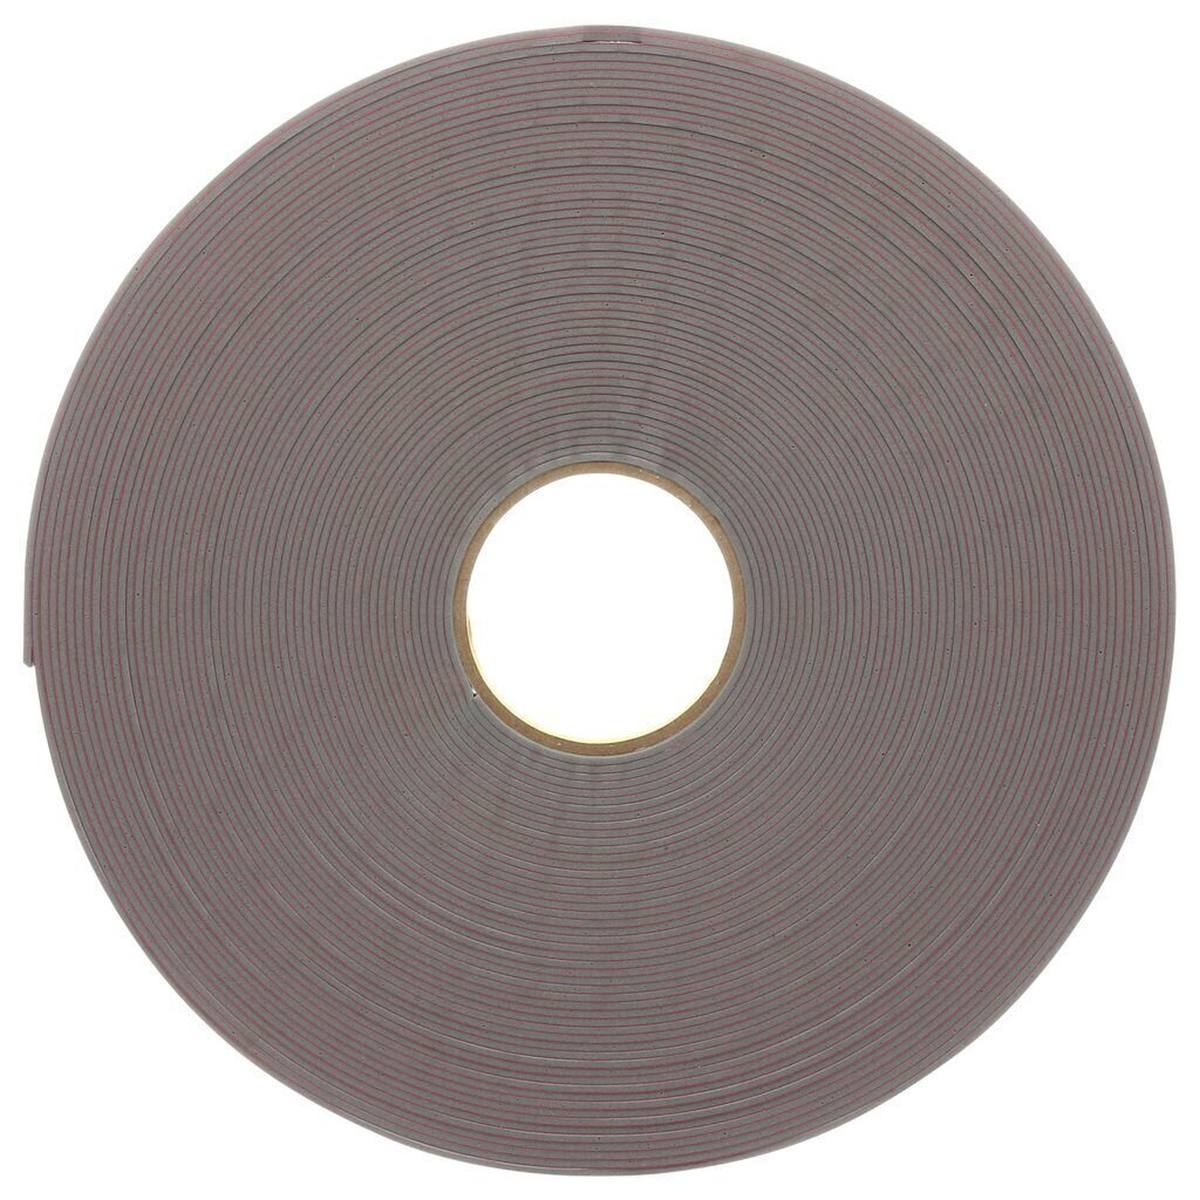 3M VHB adhesive tape 4991F, gray, 6 mm x 16.5 m, 2.3 mm